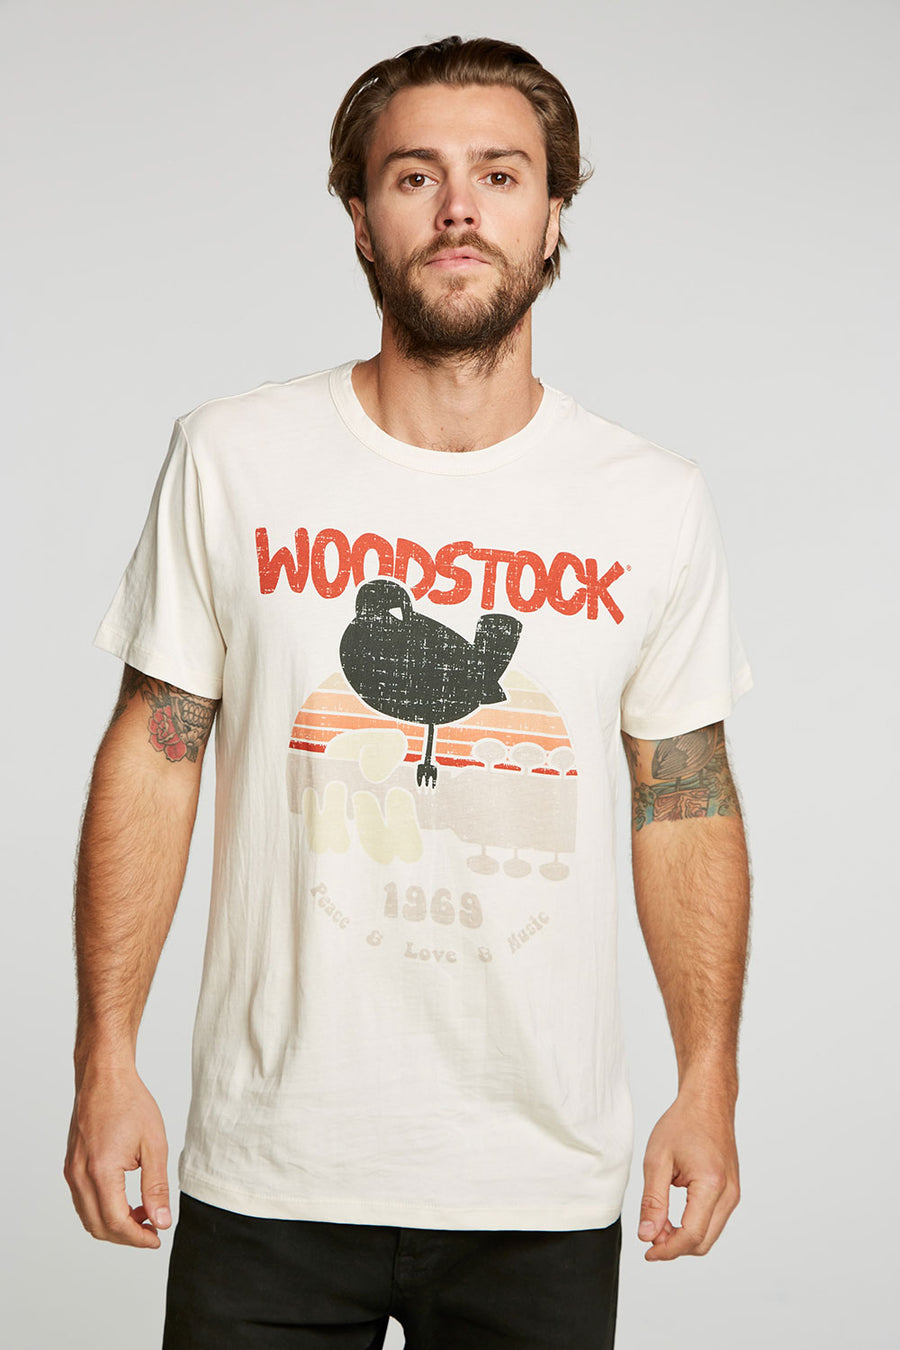 Woodstock -  1969 MENS - chaserbrand